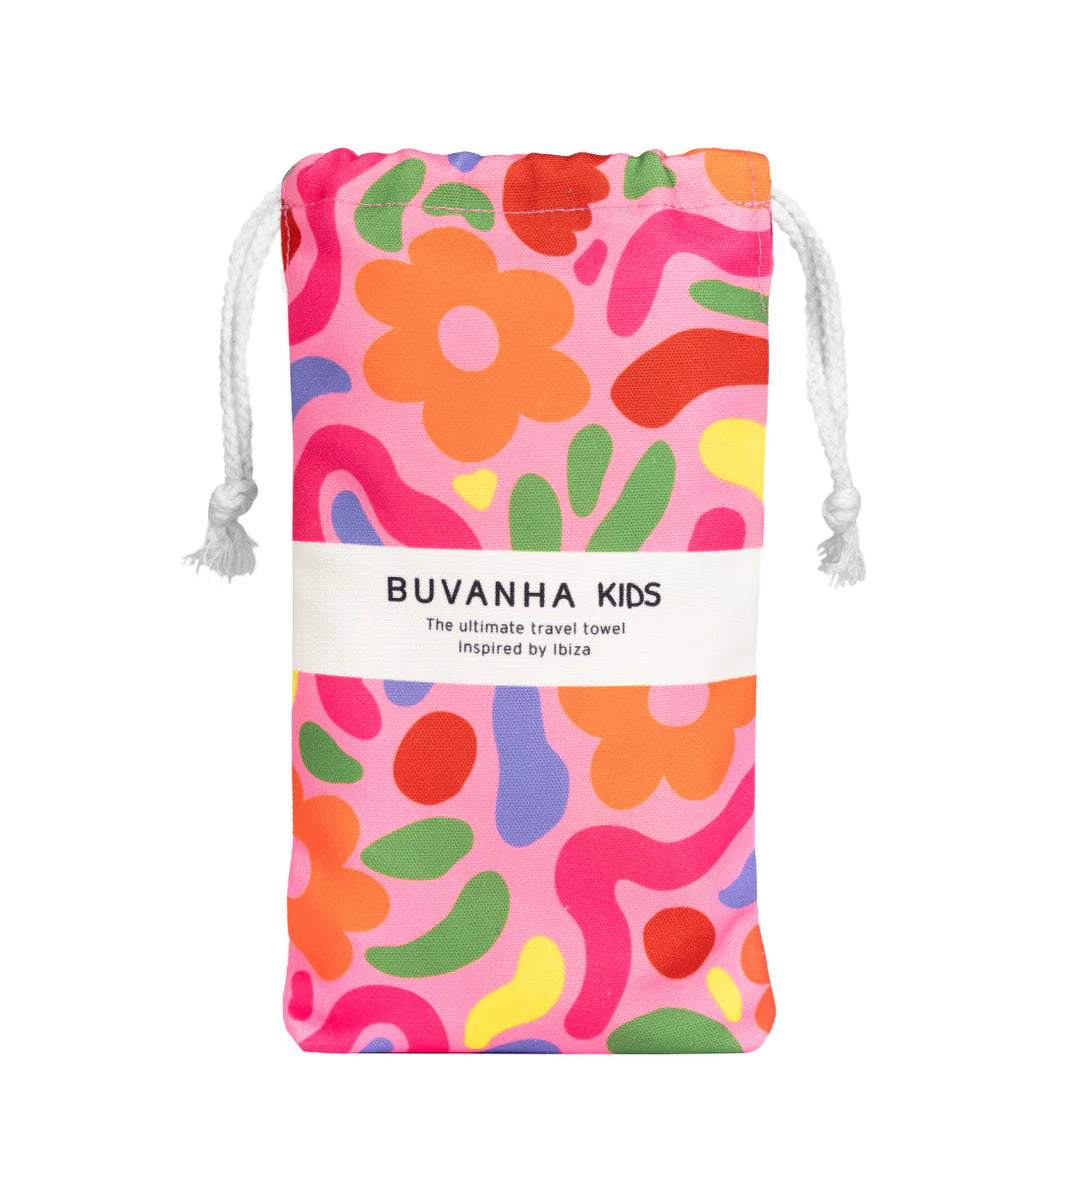 Buvanha Reishanddoek - 150x70 cm - Ibiza Kids Strandlaken - Reisartikelen-nl